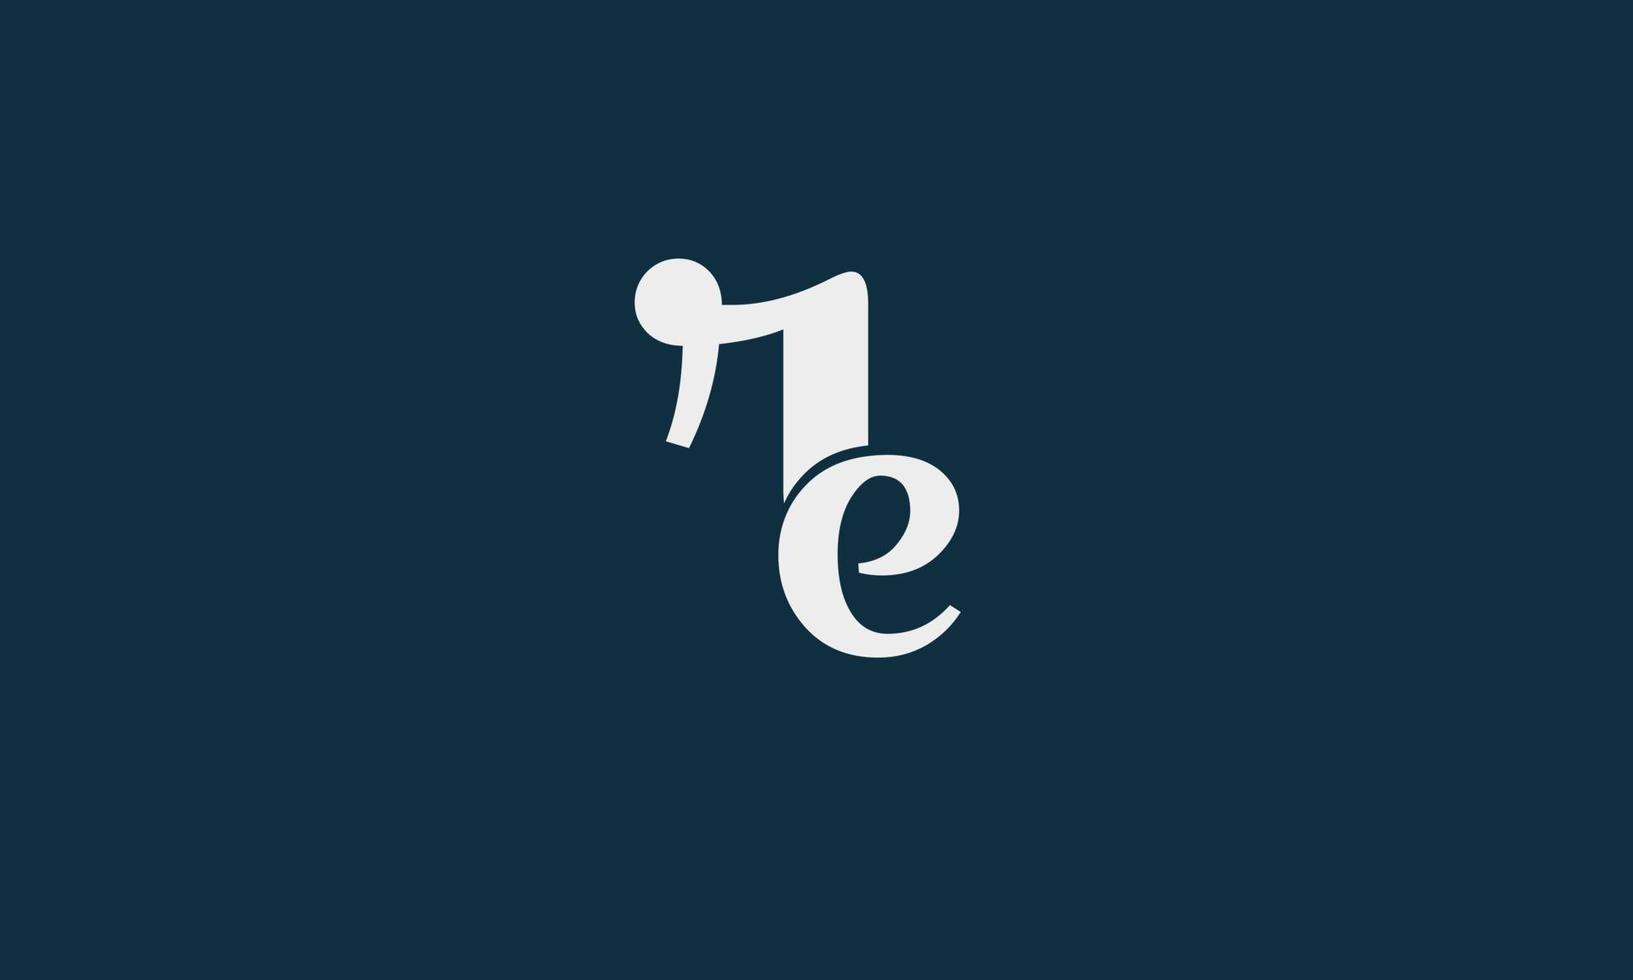 letras do alfabeto iniciais monograma logotipo re, er, r e e vetor